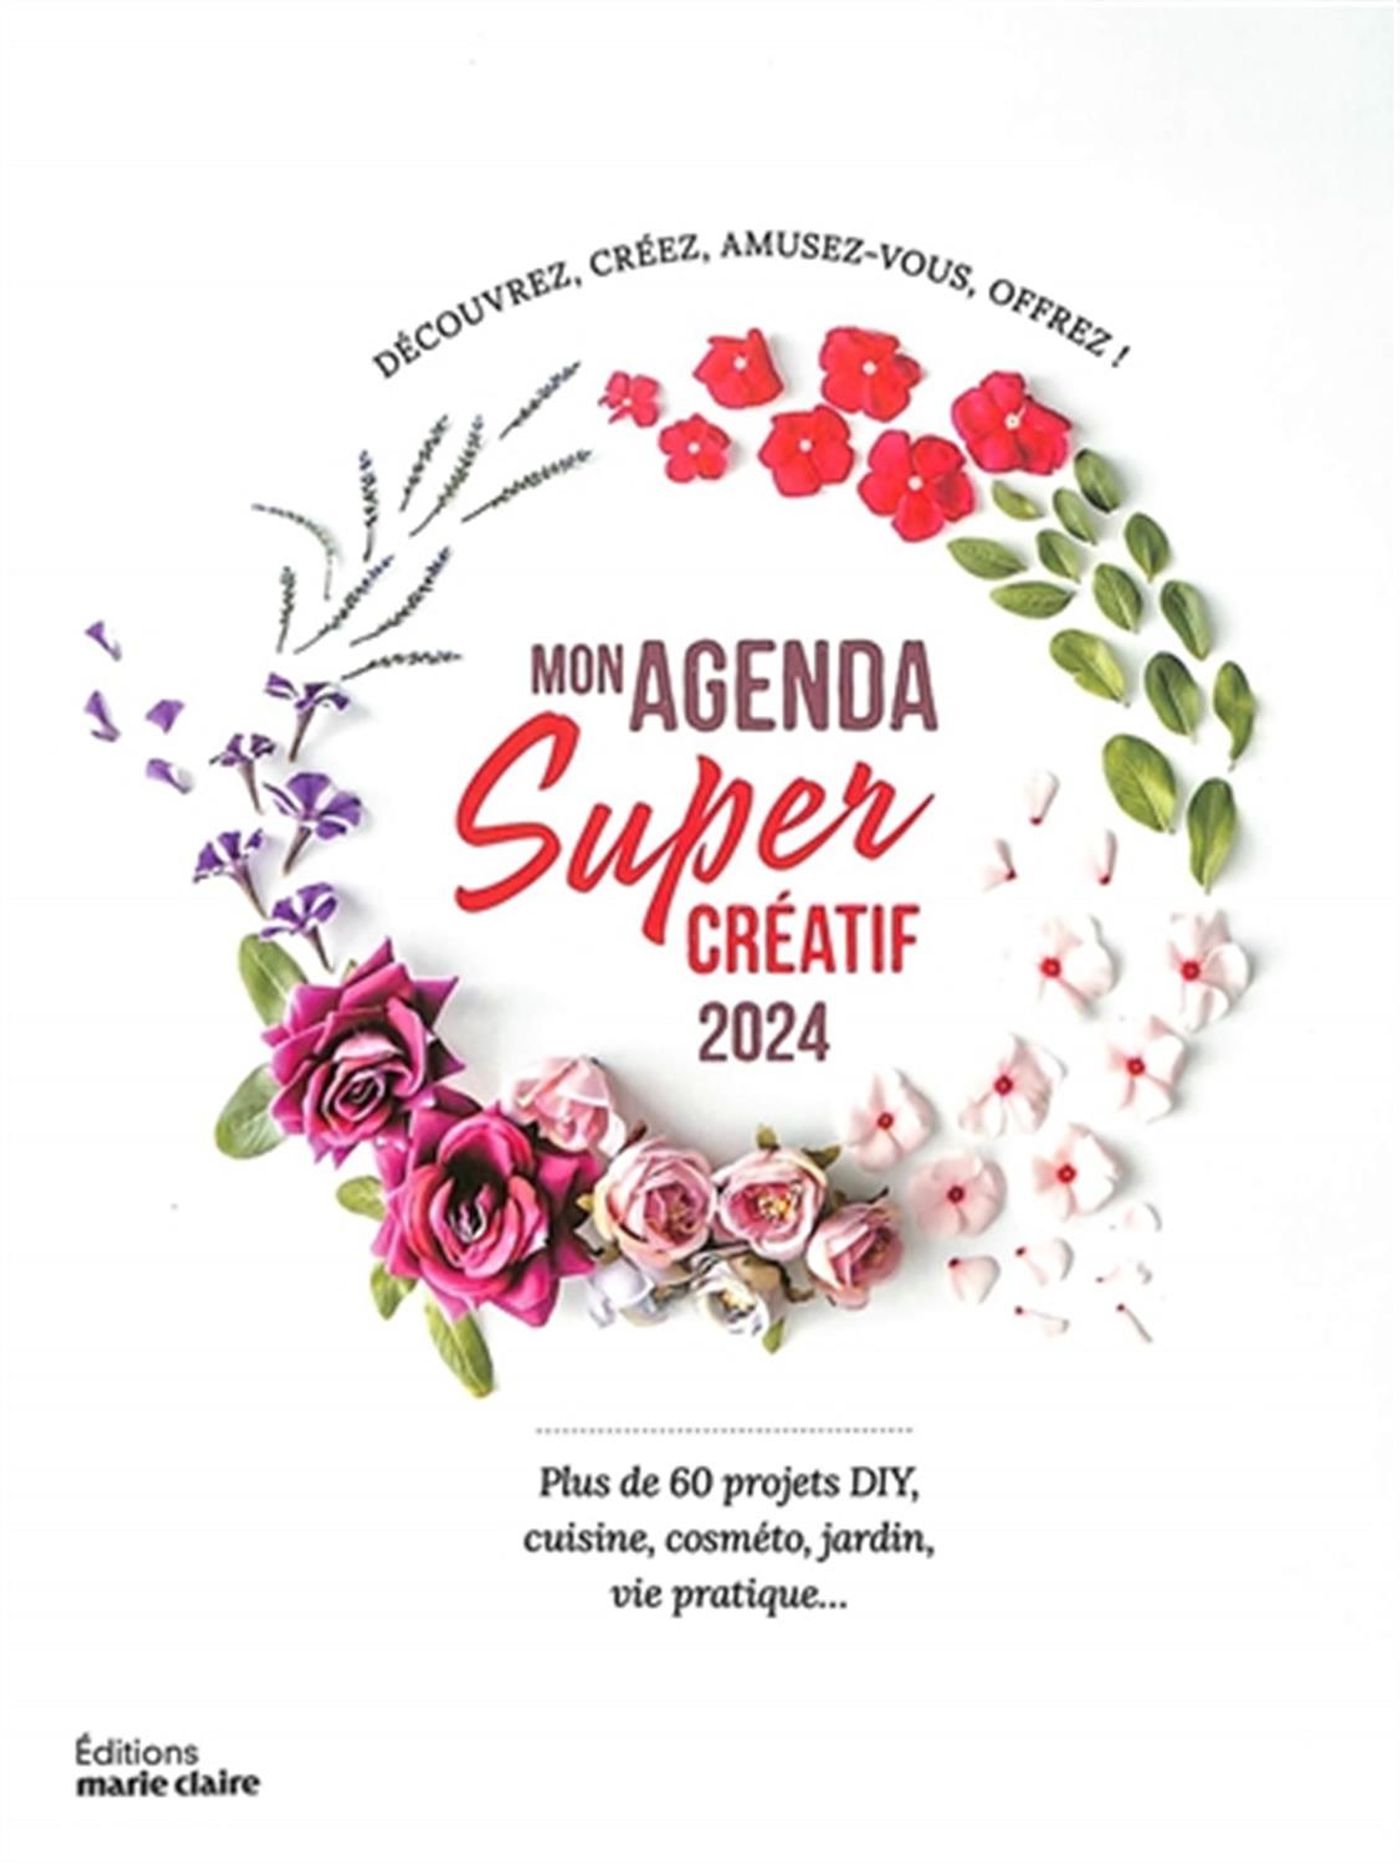 Mon agenda créatif 2024 : 52 projets DIY inspirants